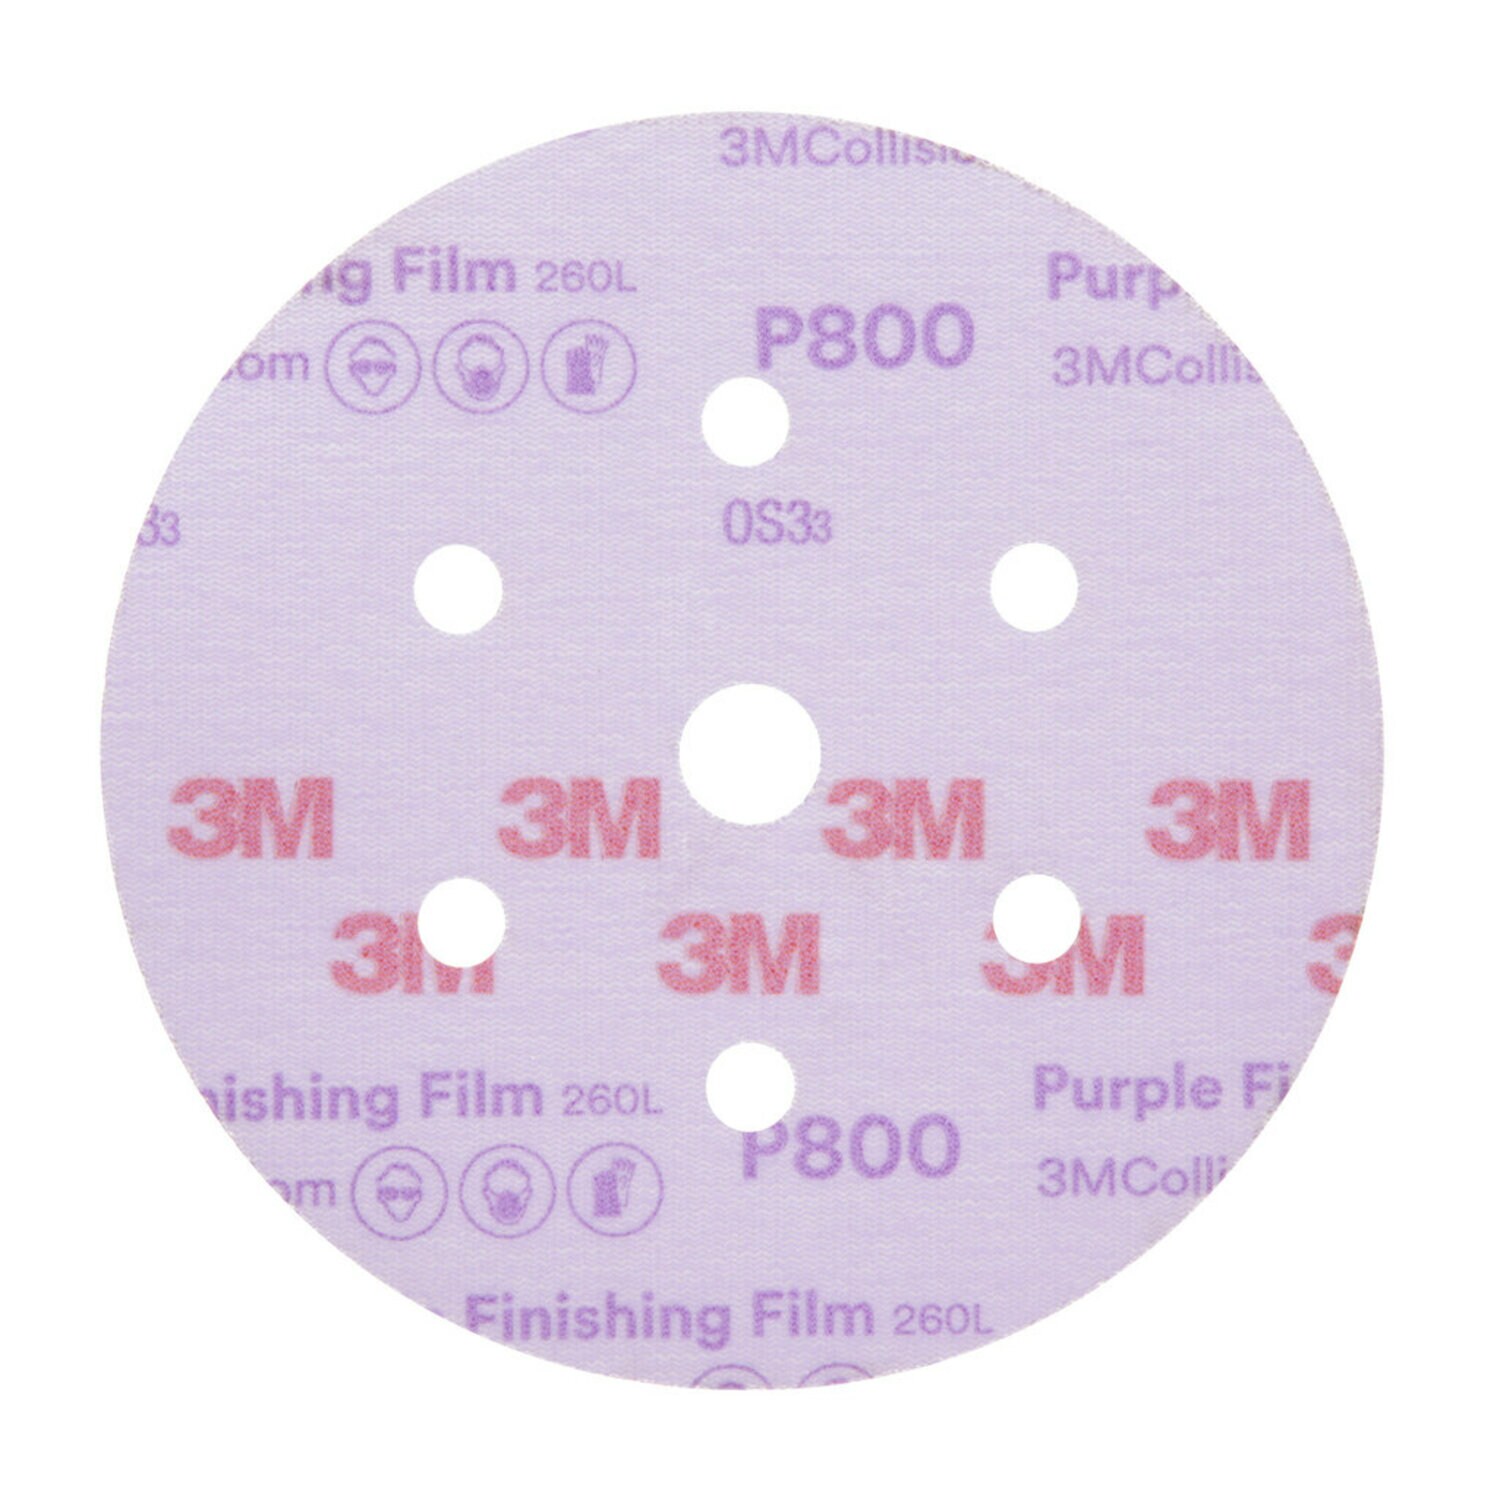 7100122726 - 3M Hookit Purple Finishing Film Abrasive Disc 260L, 30770, 6 in, Dust
Free, P800, 50 discs per carton, 4 cartons per case